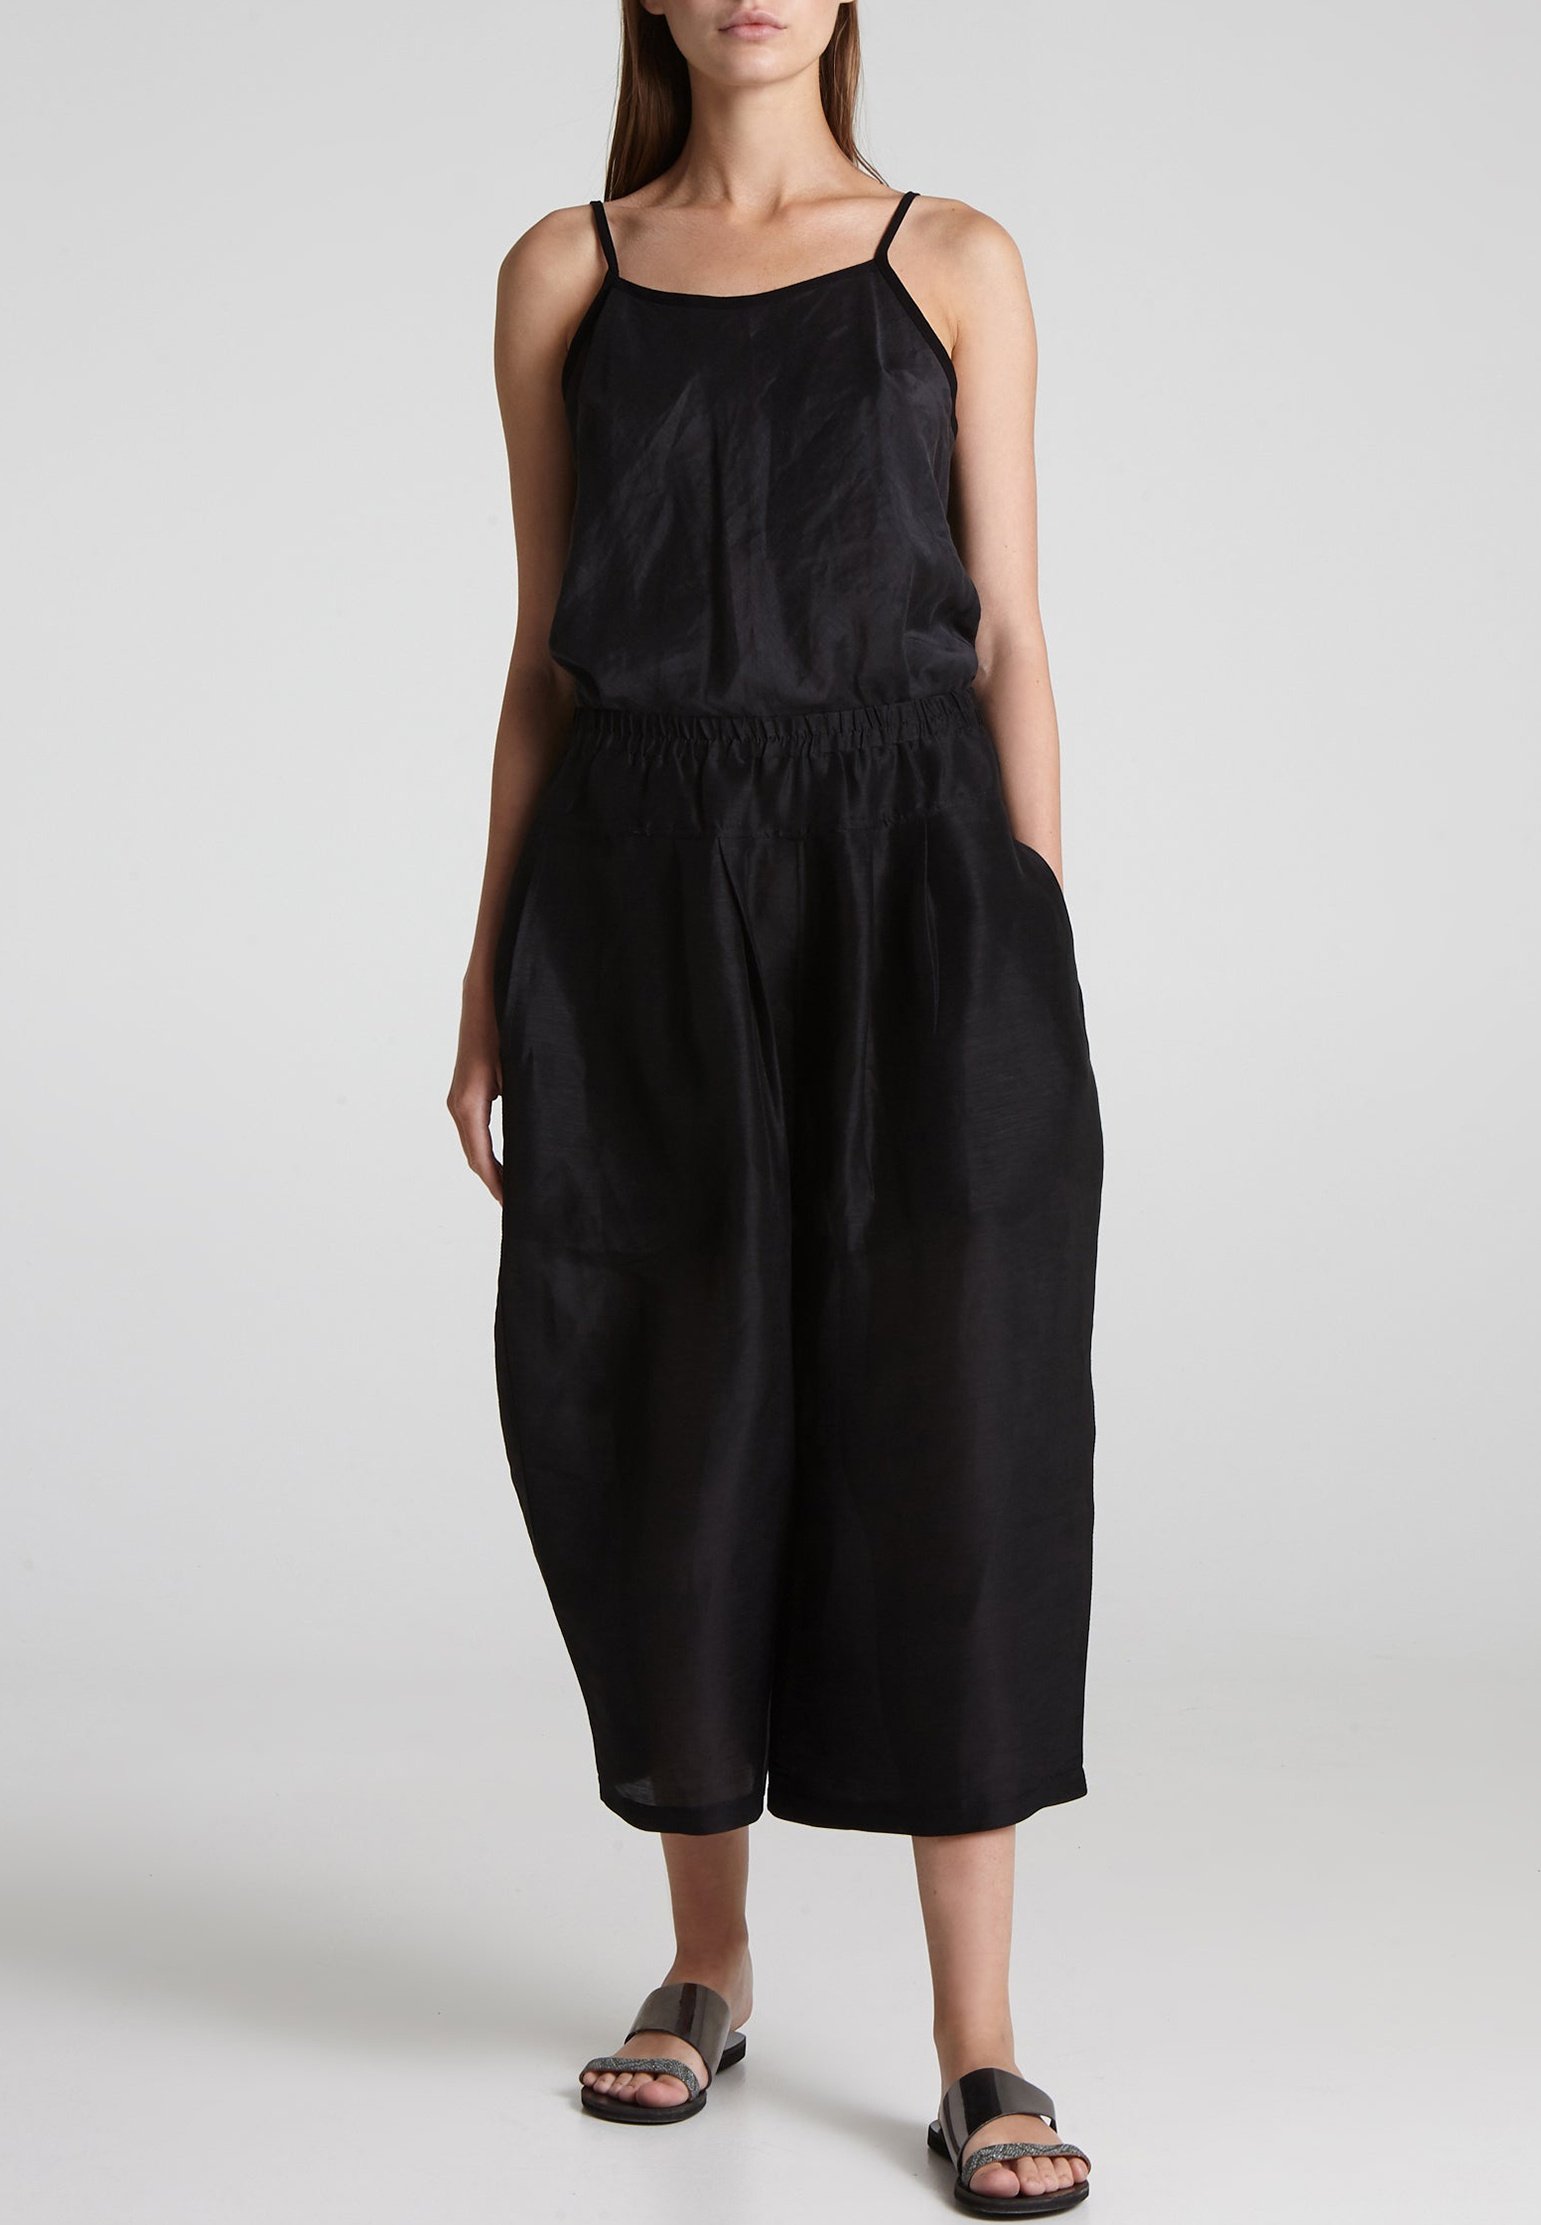 Shorts MAURIZIO Color: black (Code: 3340) in online store Allure